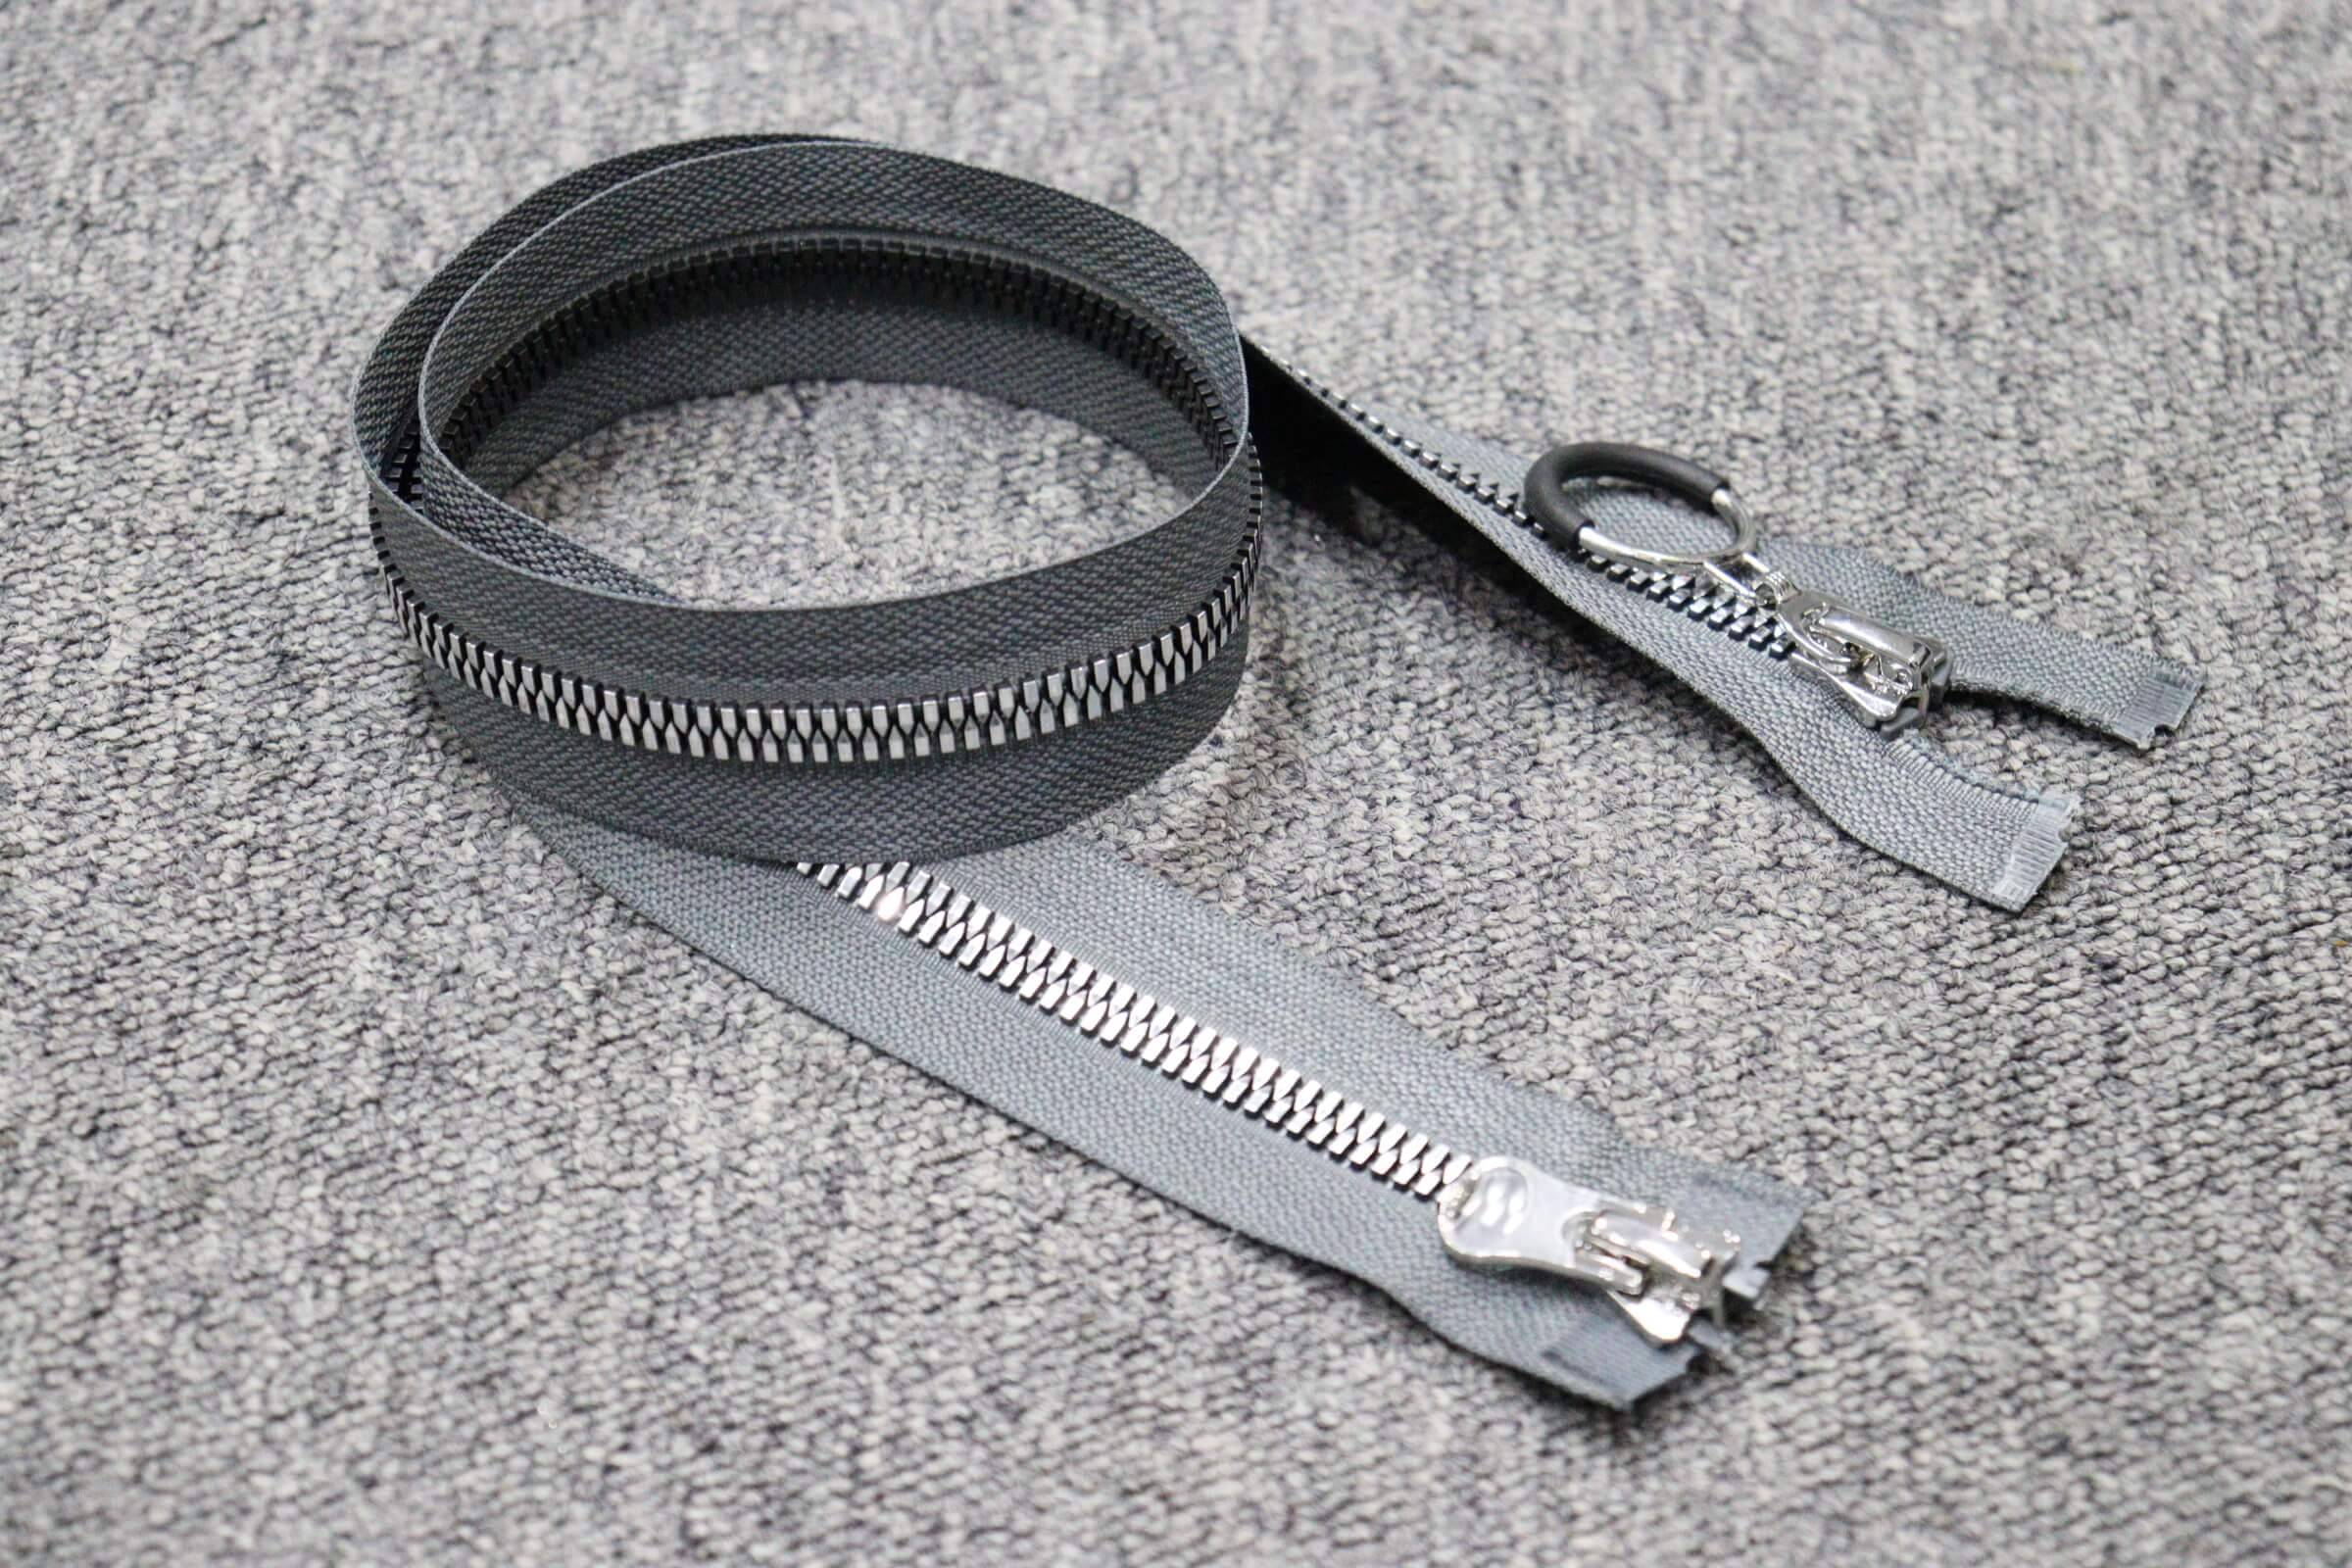 ZIPHOO #8 Metal Two-Way Separating Zipper